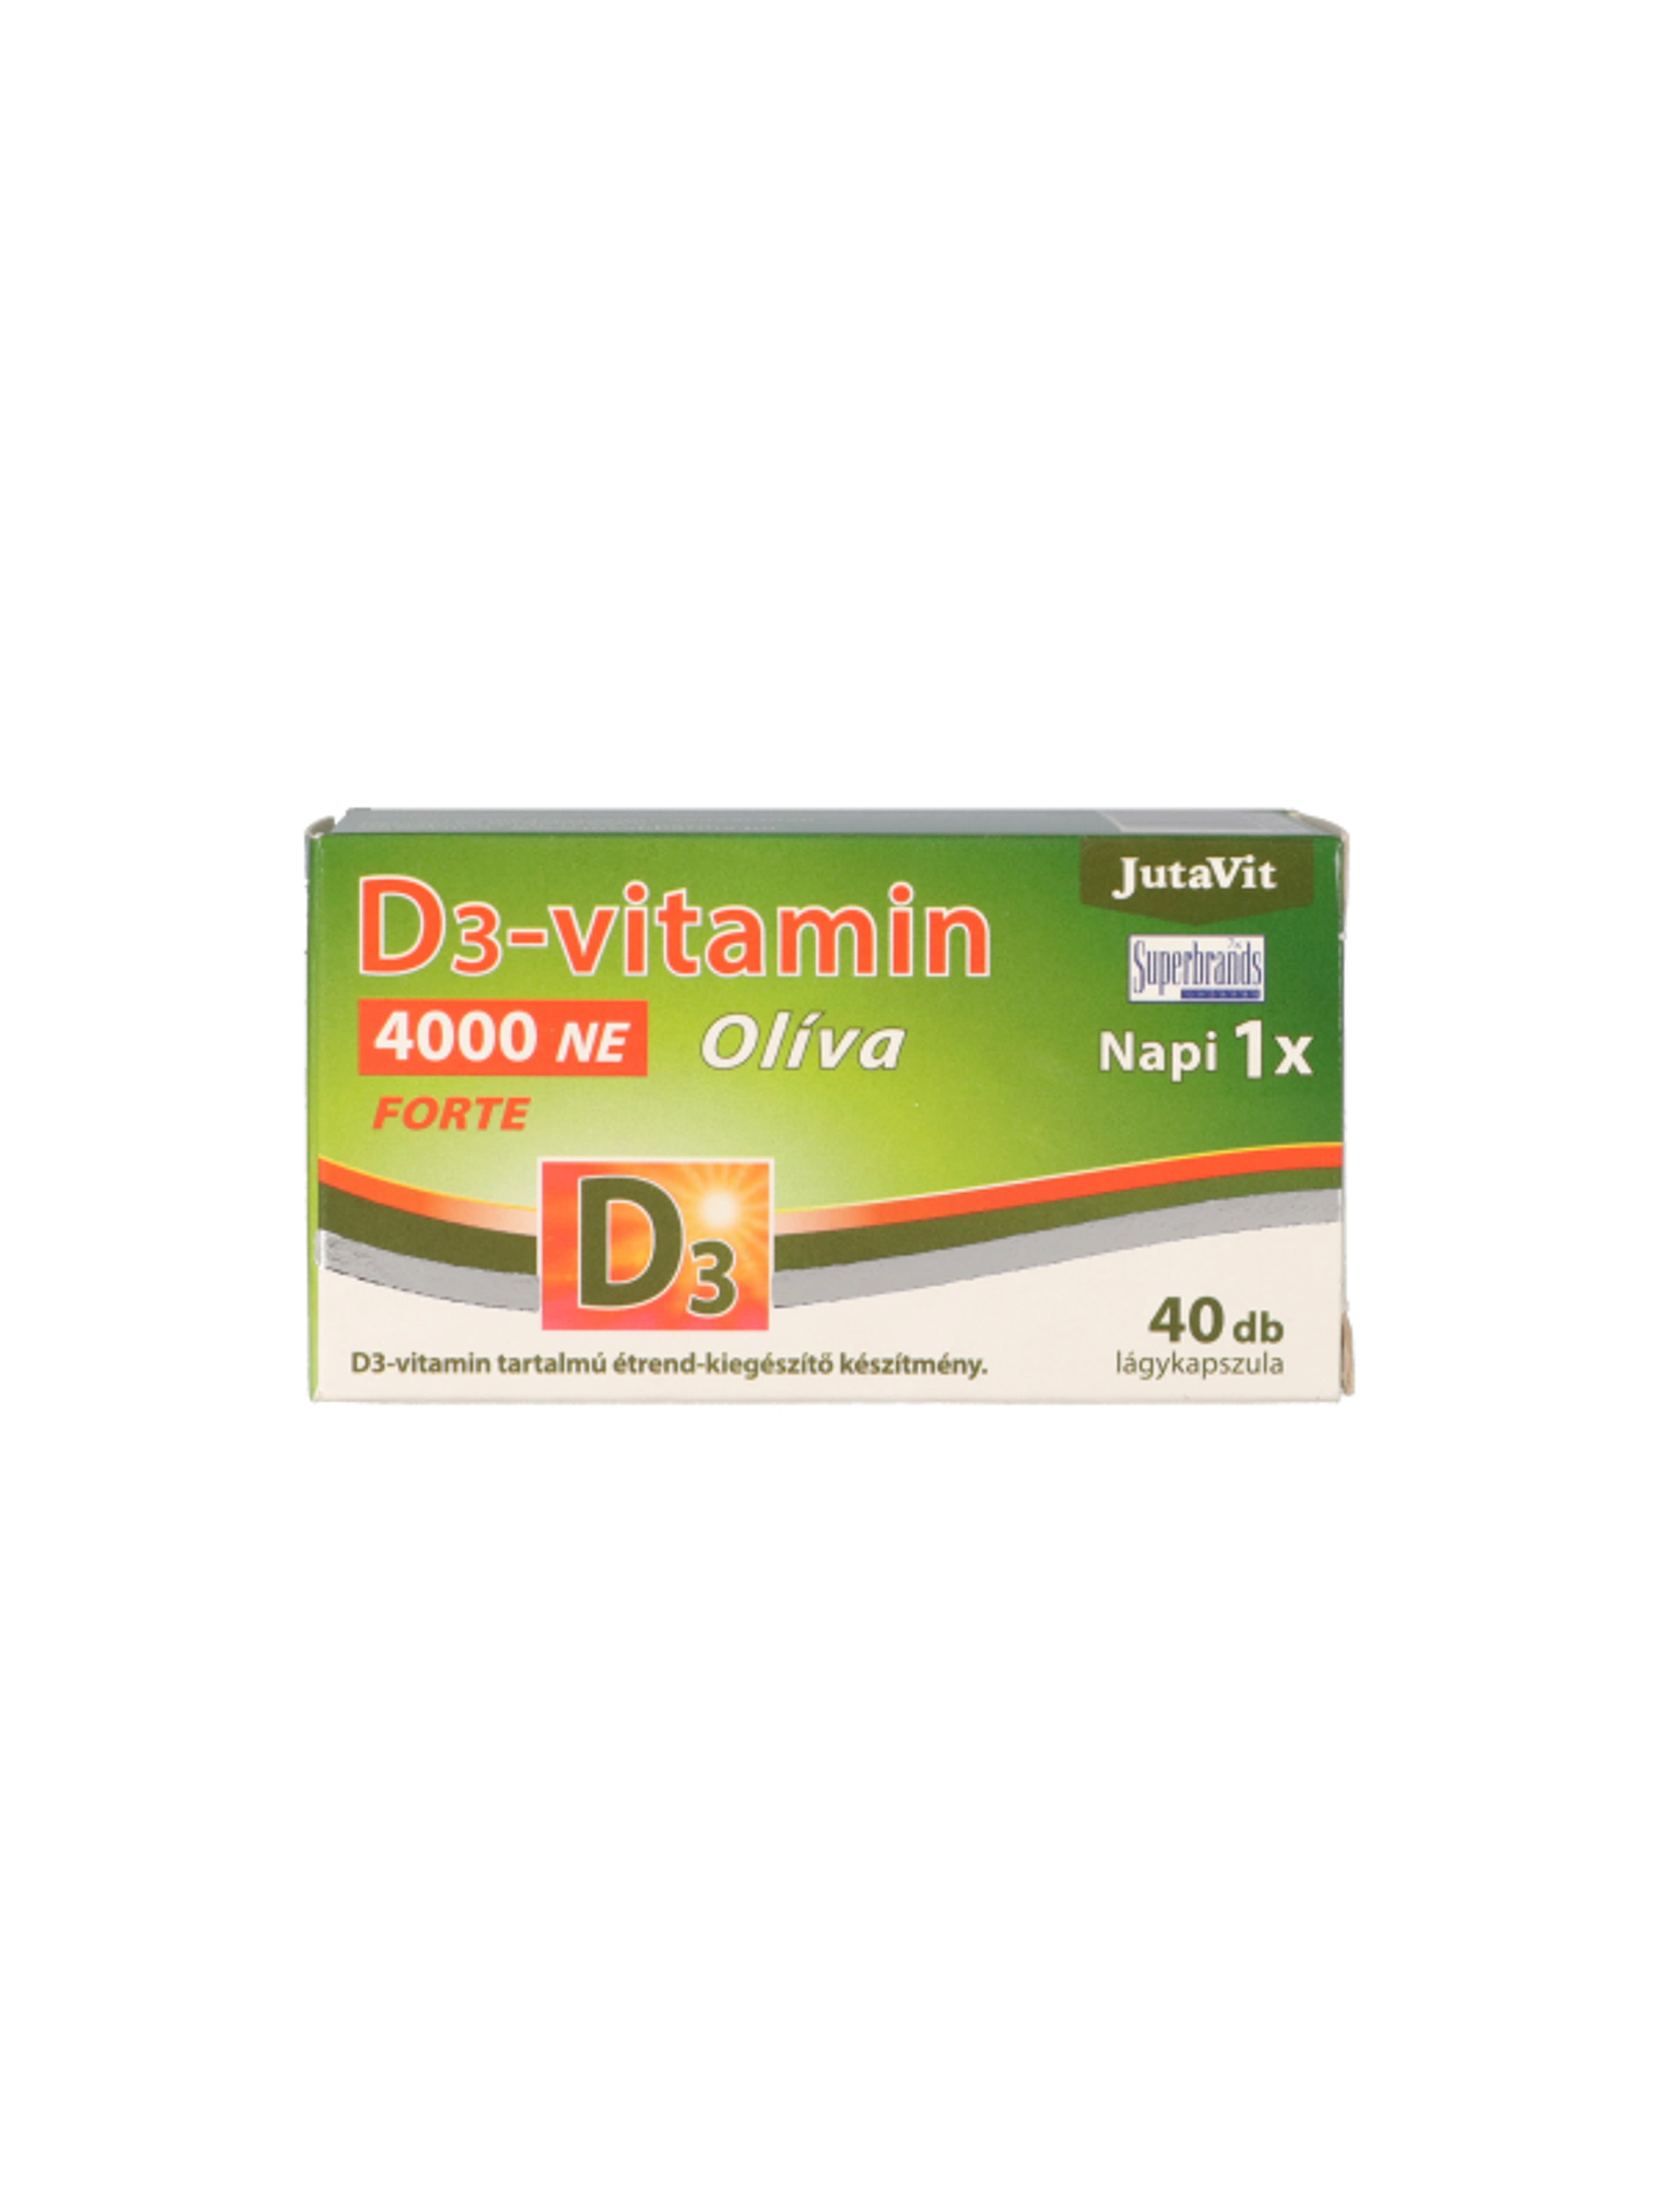 JutaVit D3-vitamin 4000NE Oliva Forte lágykapszula - 40 db-1